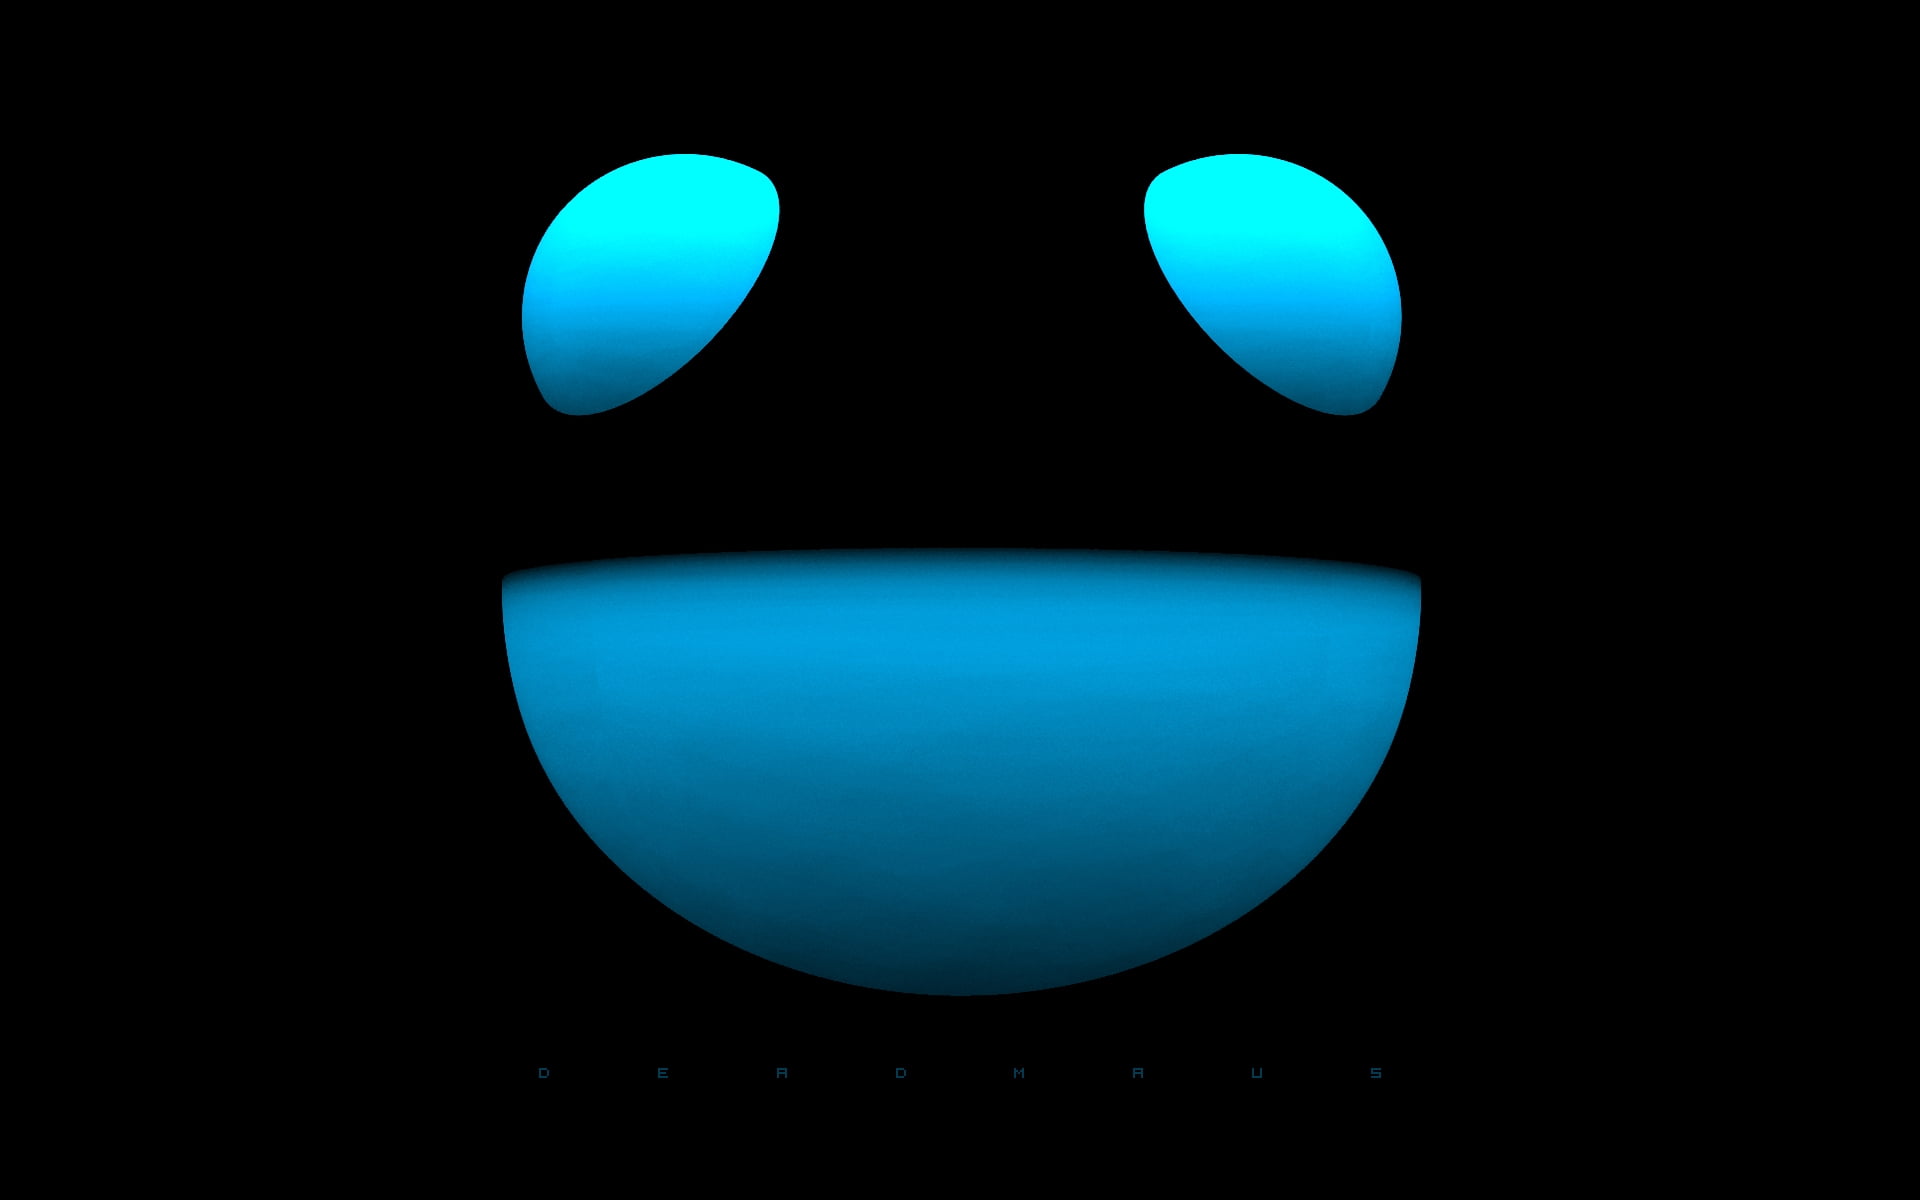 blue smiley emoji